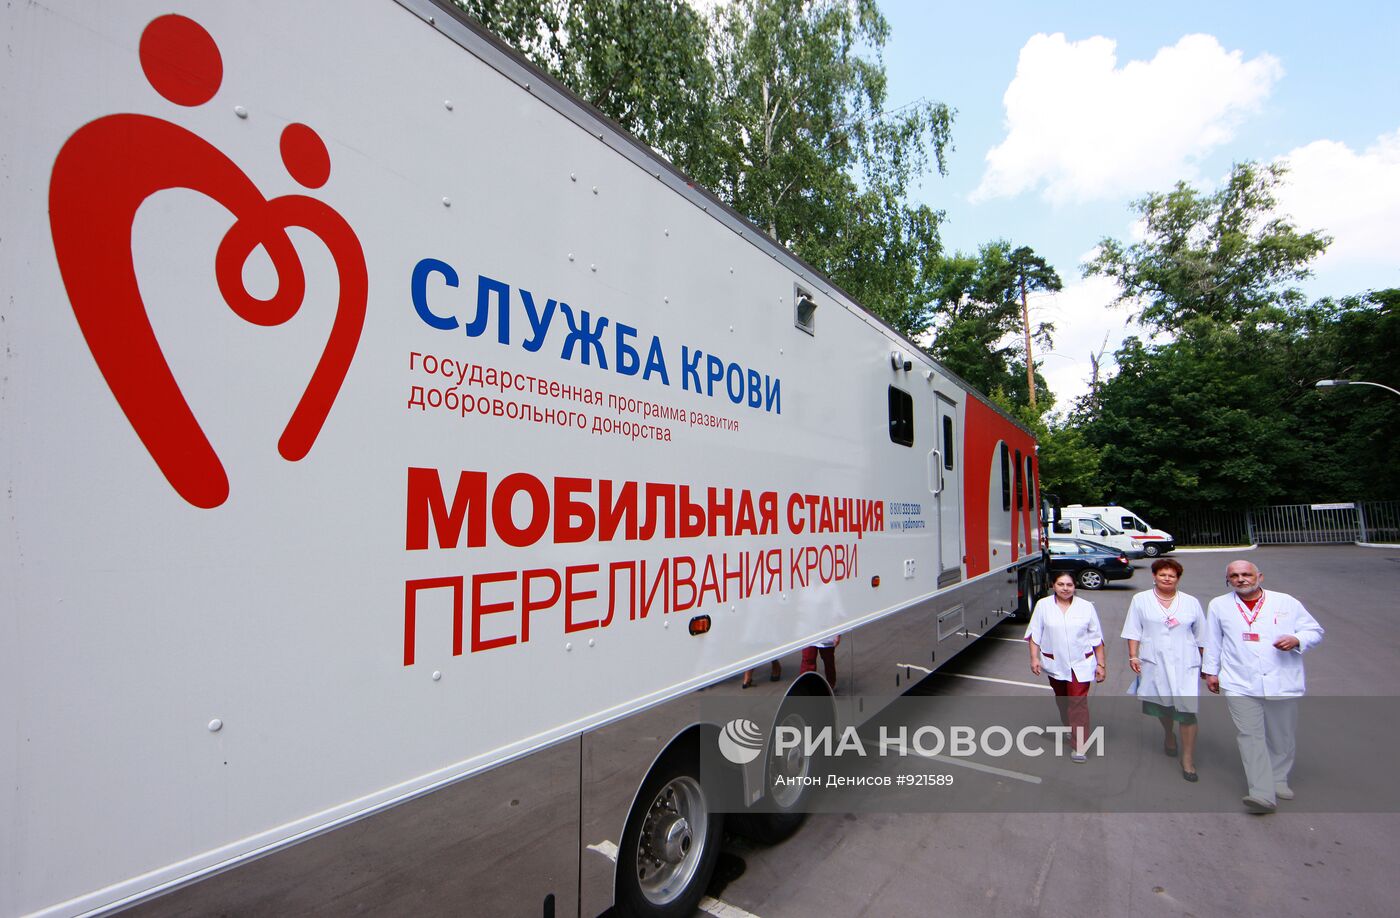 Работа центра переливания крови ФМБА России